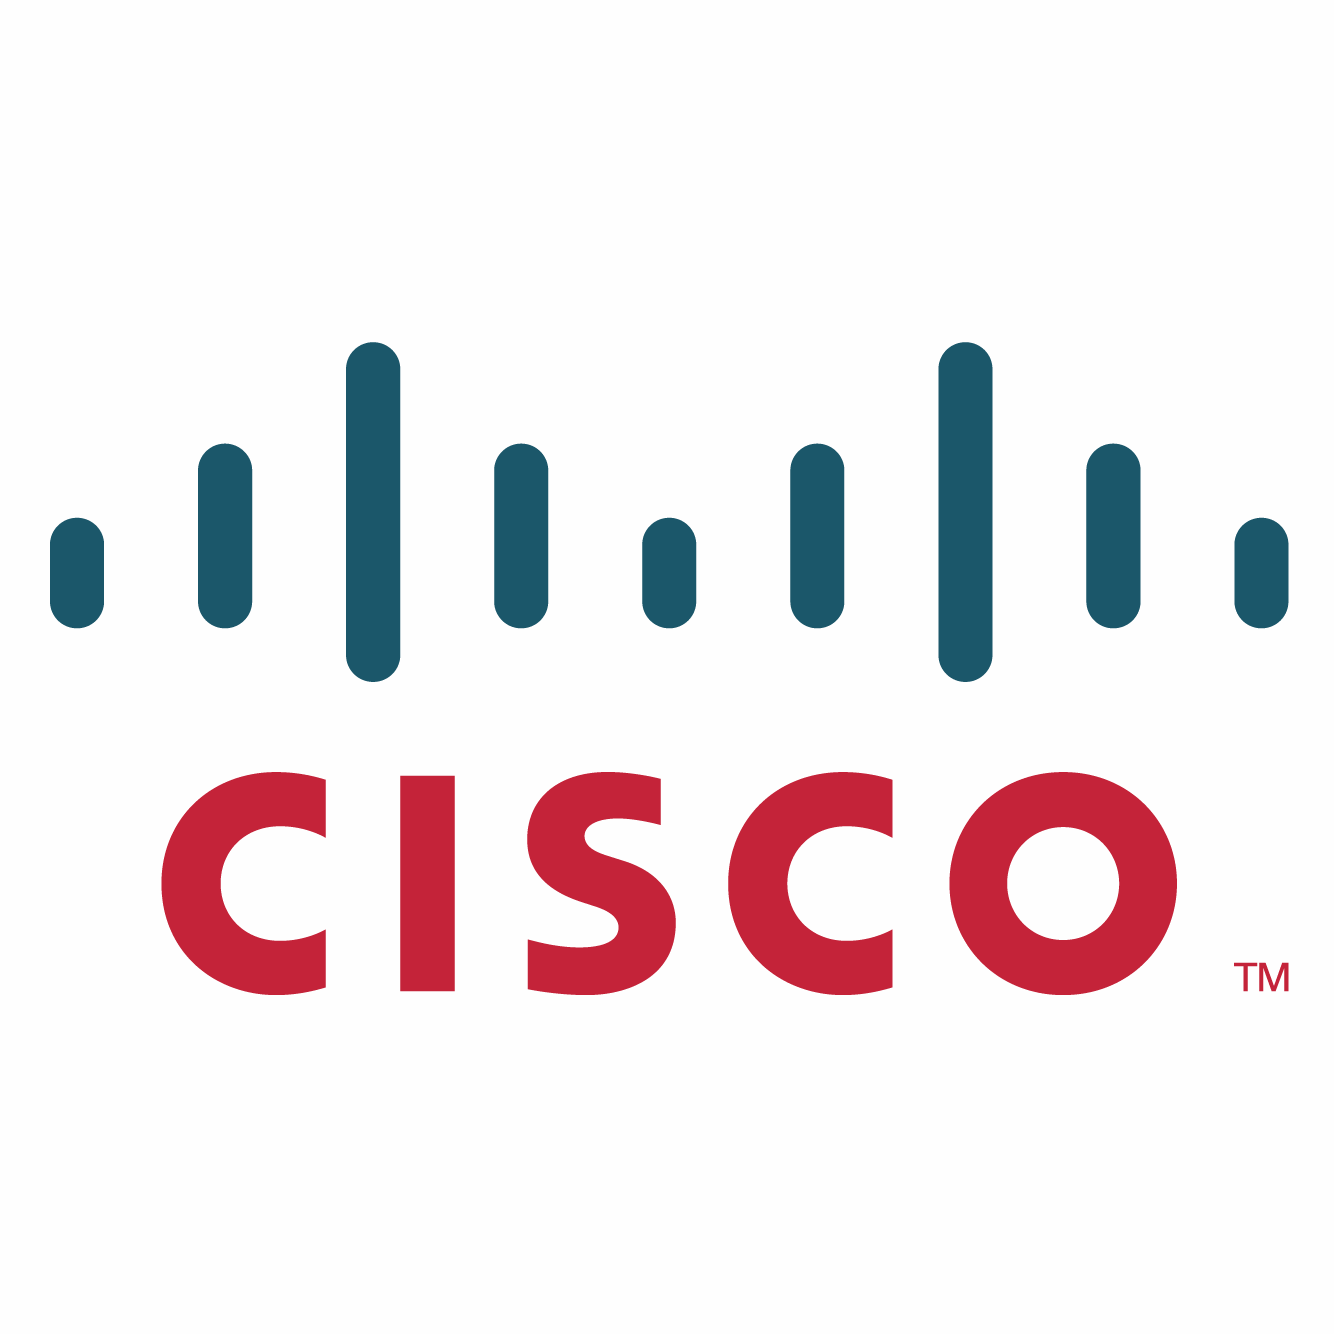 http://securetech.ae/wp-content/uploads/2019/02/04.CISCO_.png